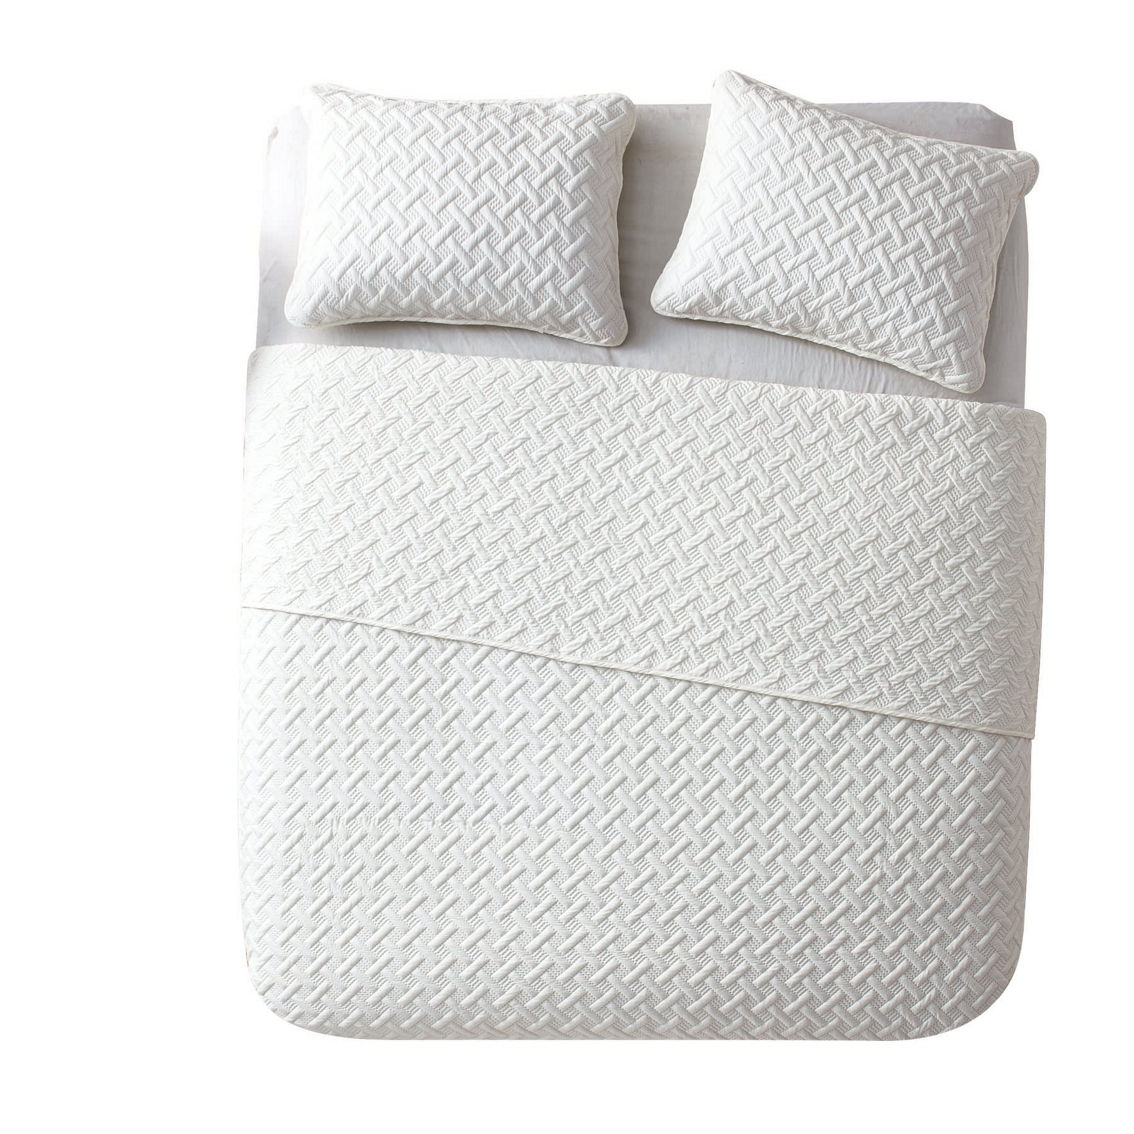 VCNY Home Nina Solid Basketweave Quilt Set - Image 3 of 5